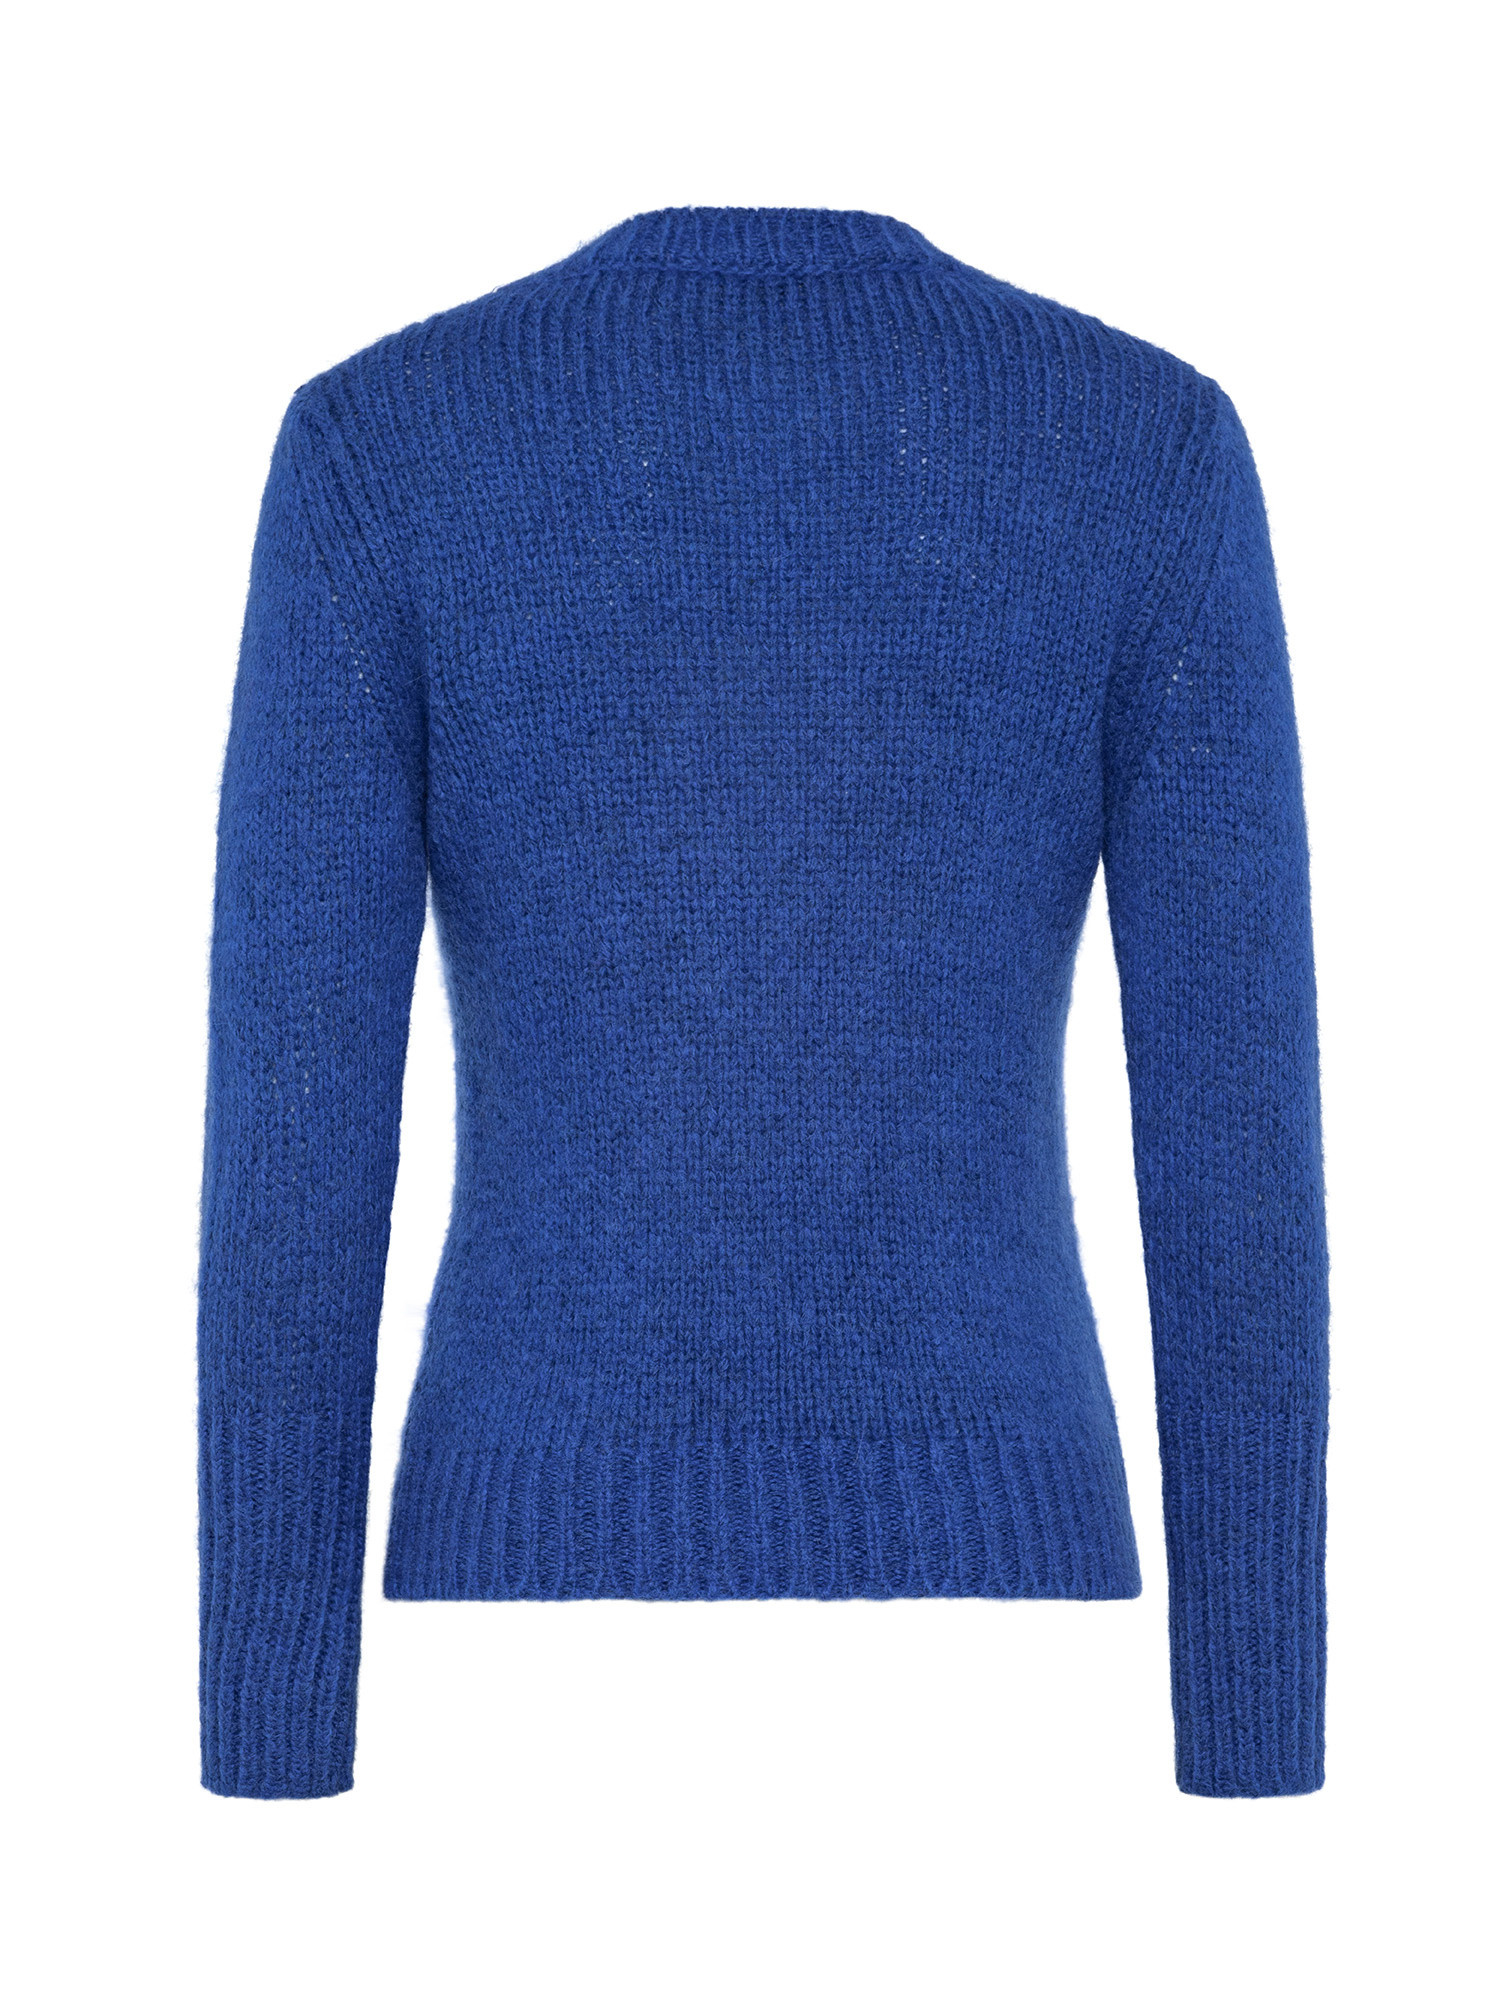 K Collection - Crewneck sweater, Blue, large image number 1